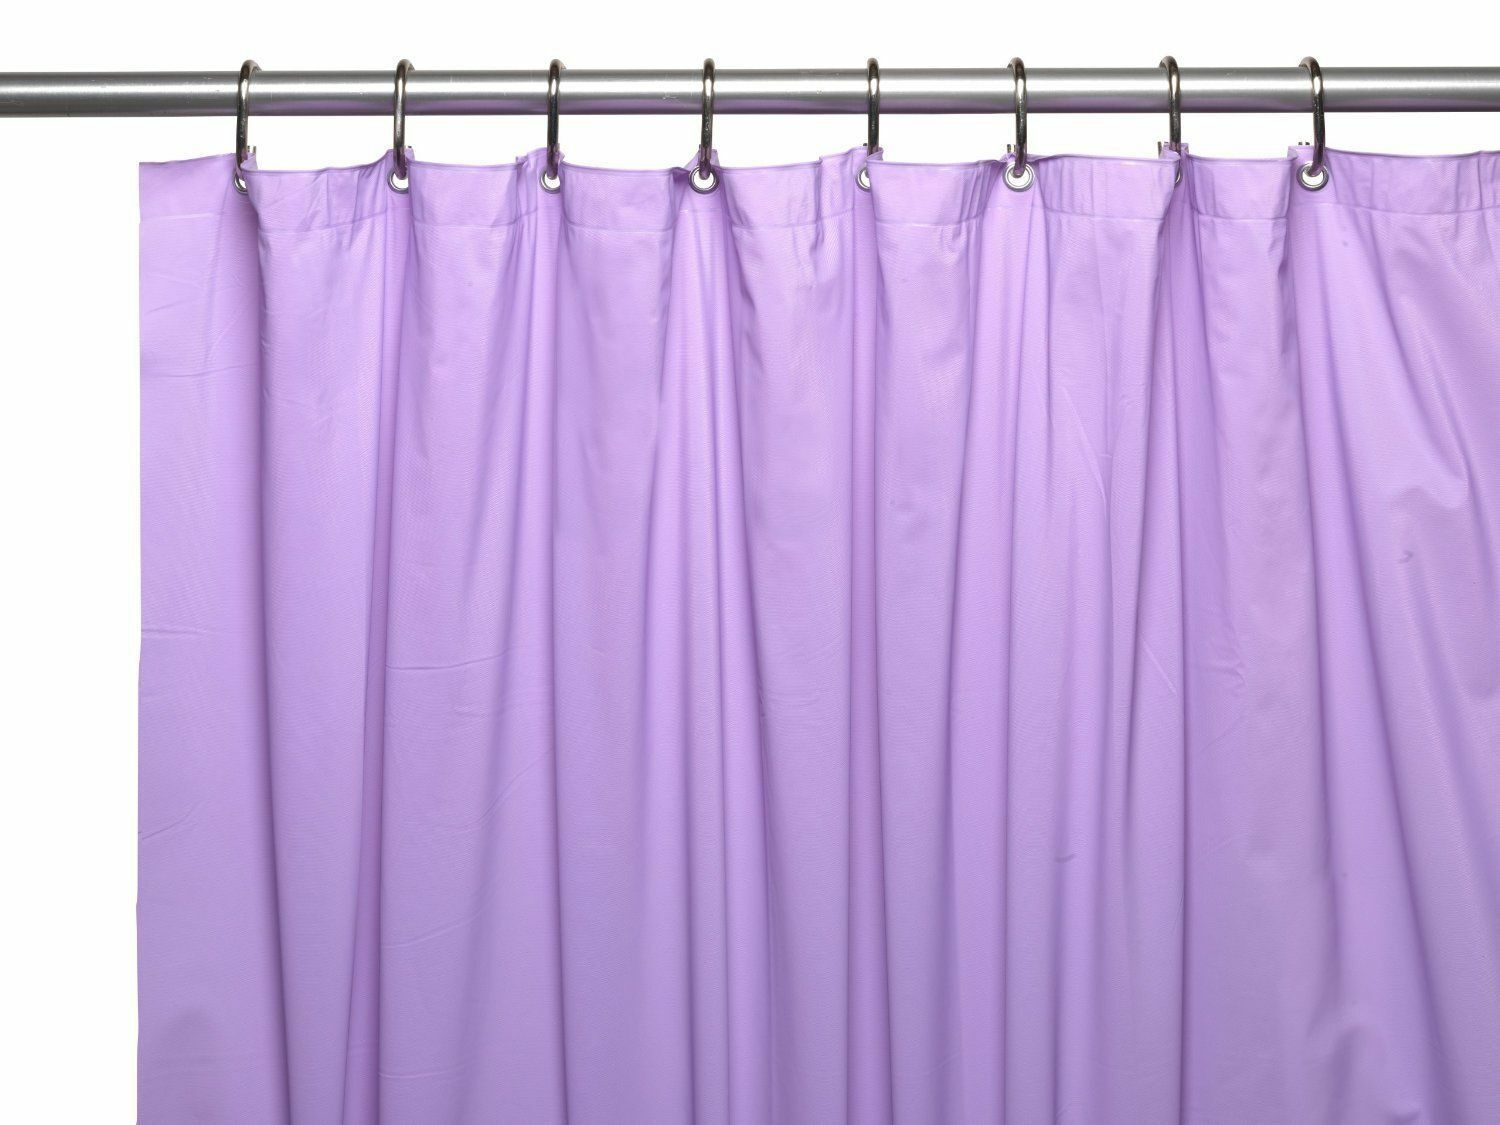 Shower Curtains - Vinyl Shower Curtain Liner - 21 Colors & Patterns - Lilac